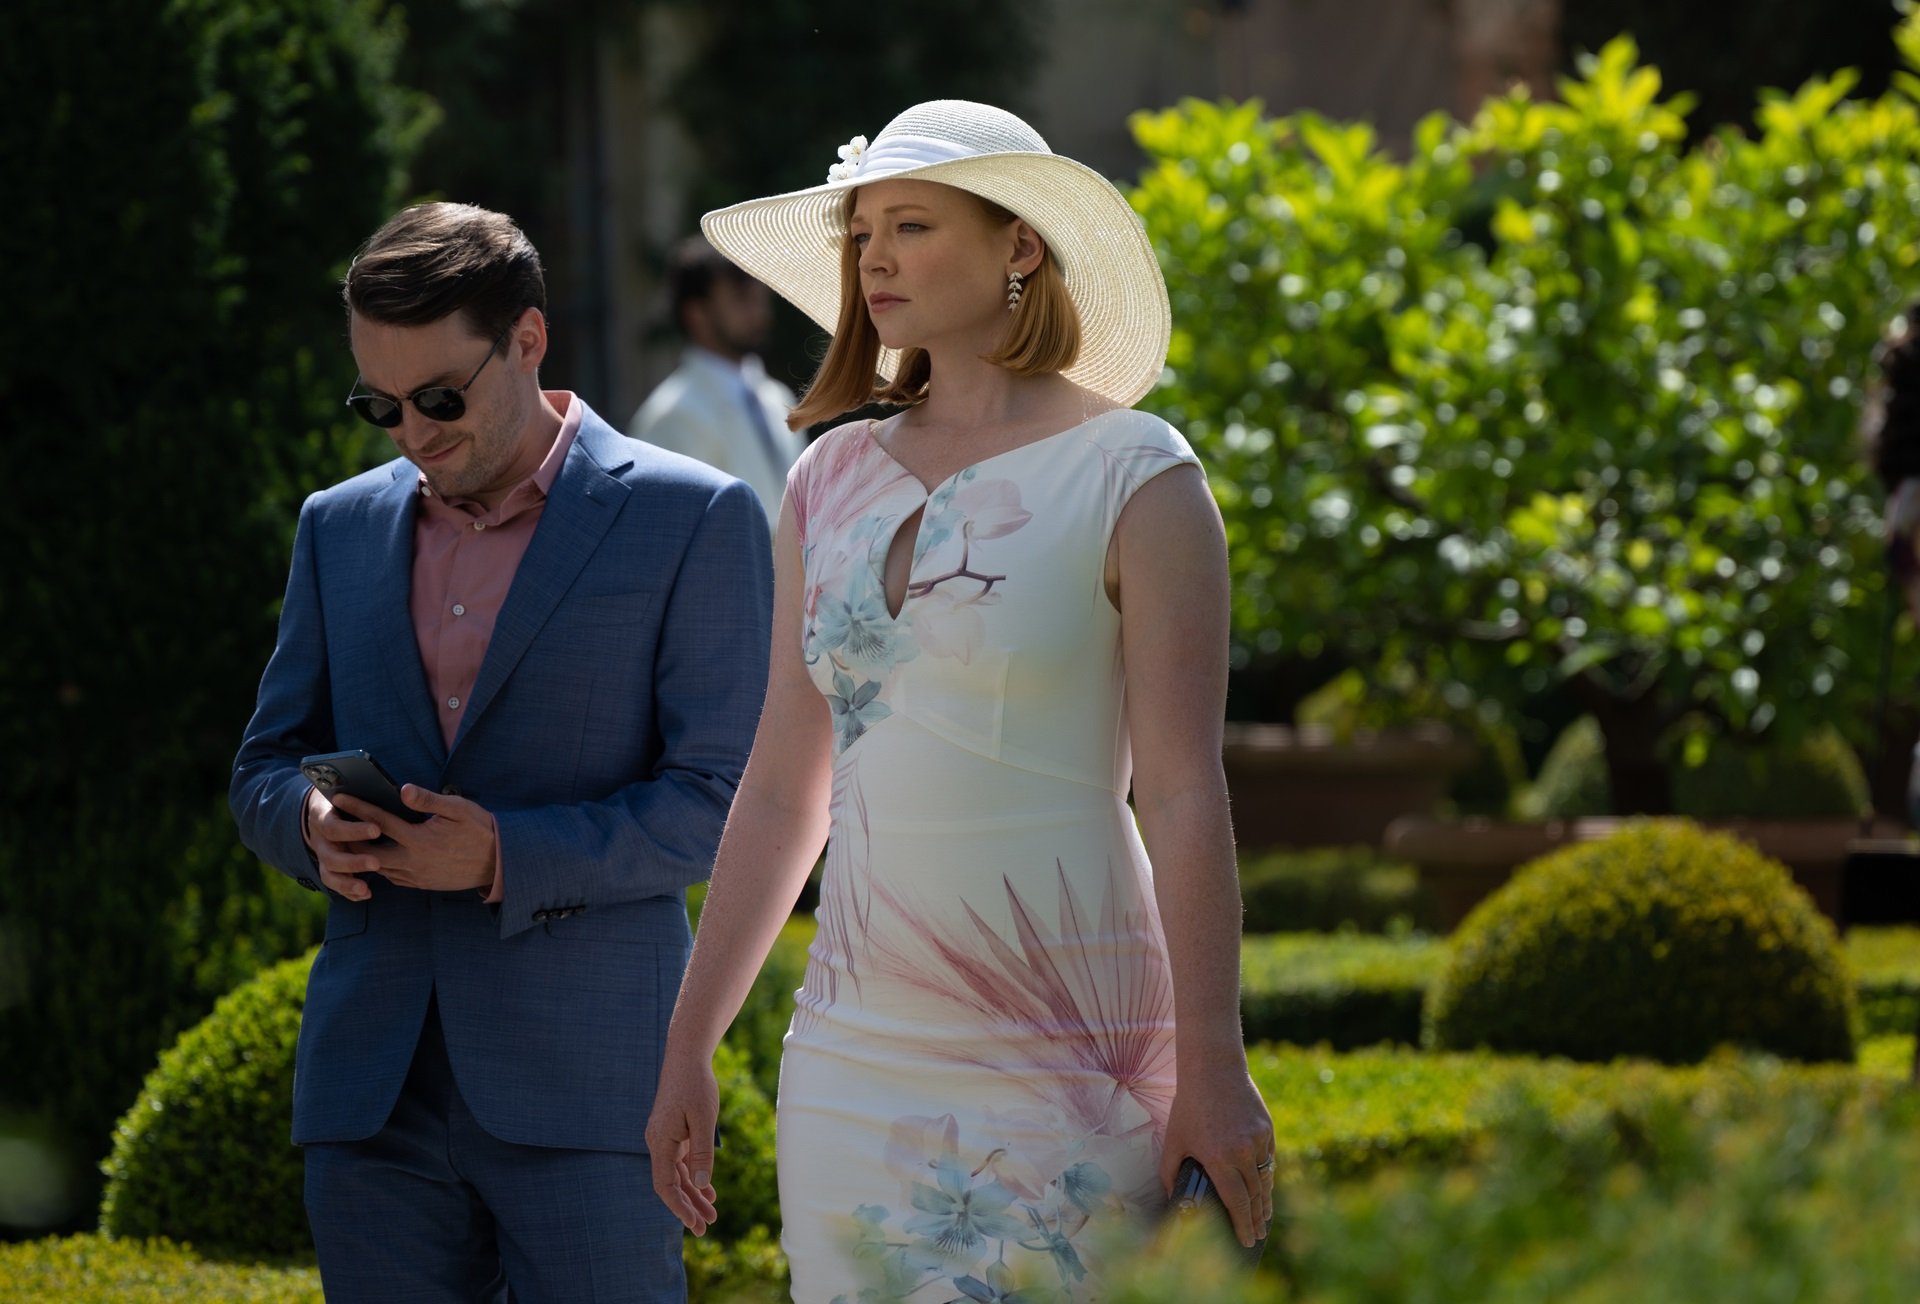 'Succession' stars Kieran Culkin and Sarah Snook walking together portraying Roman and Shiv Roy